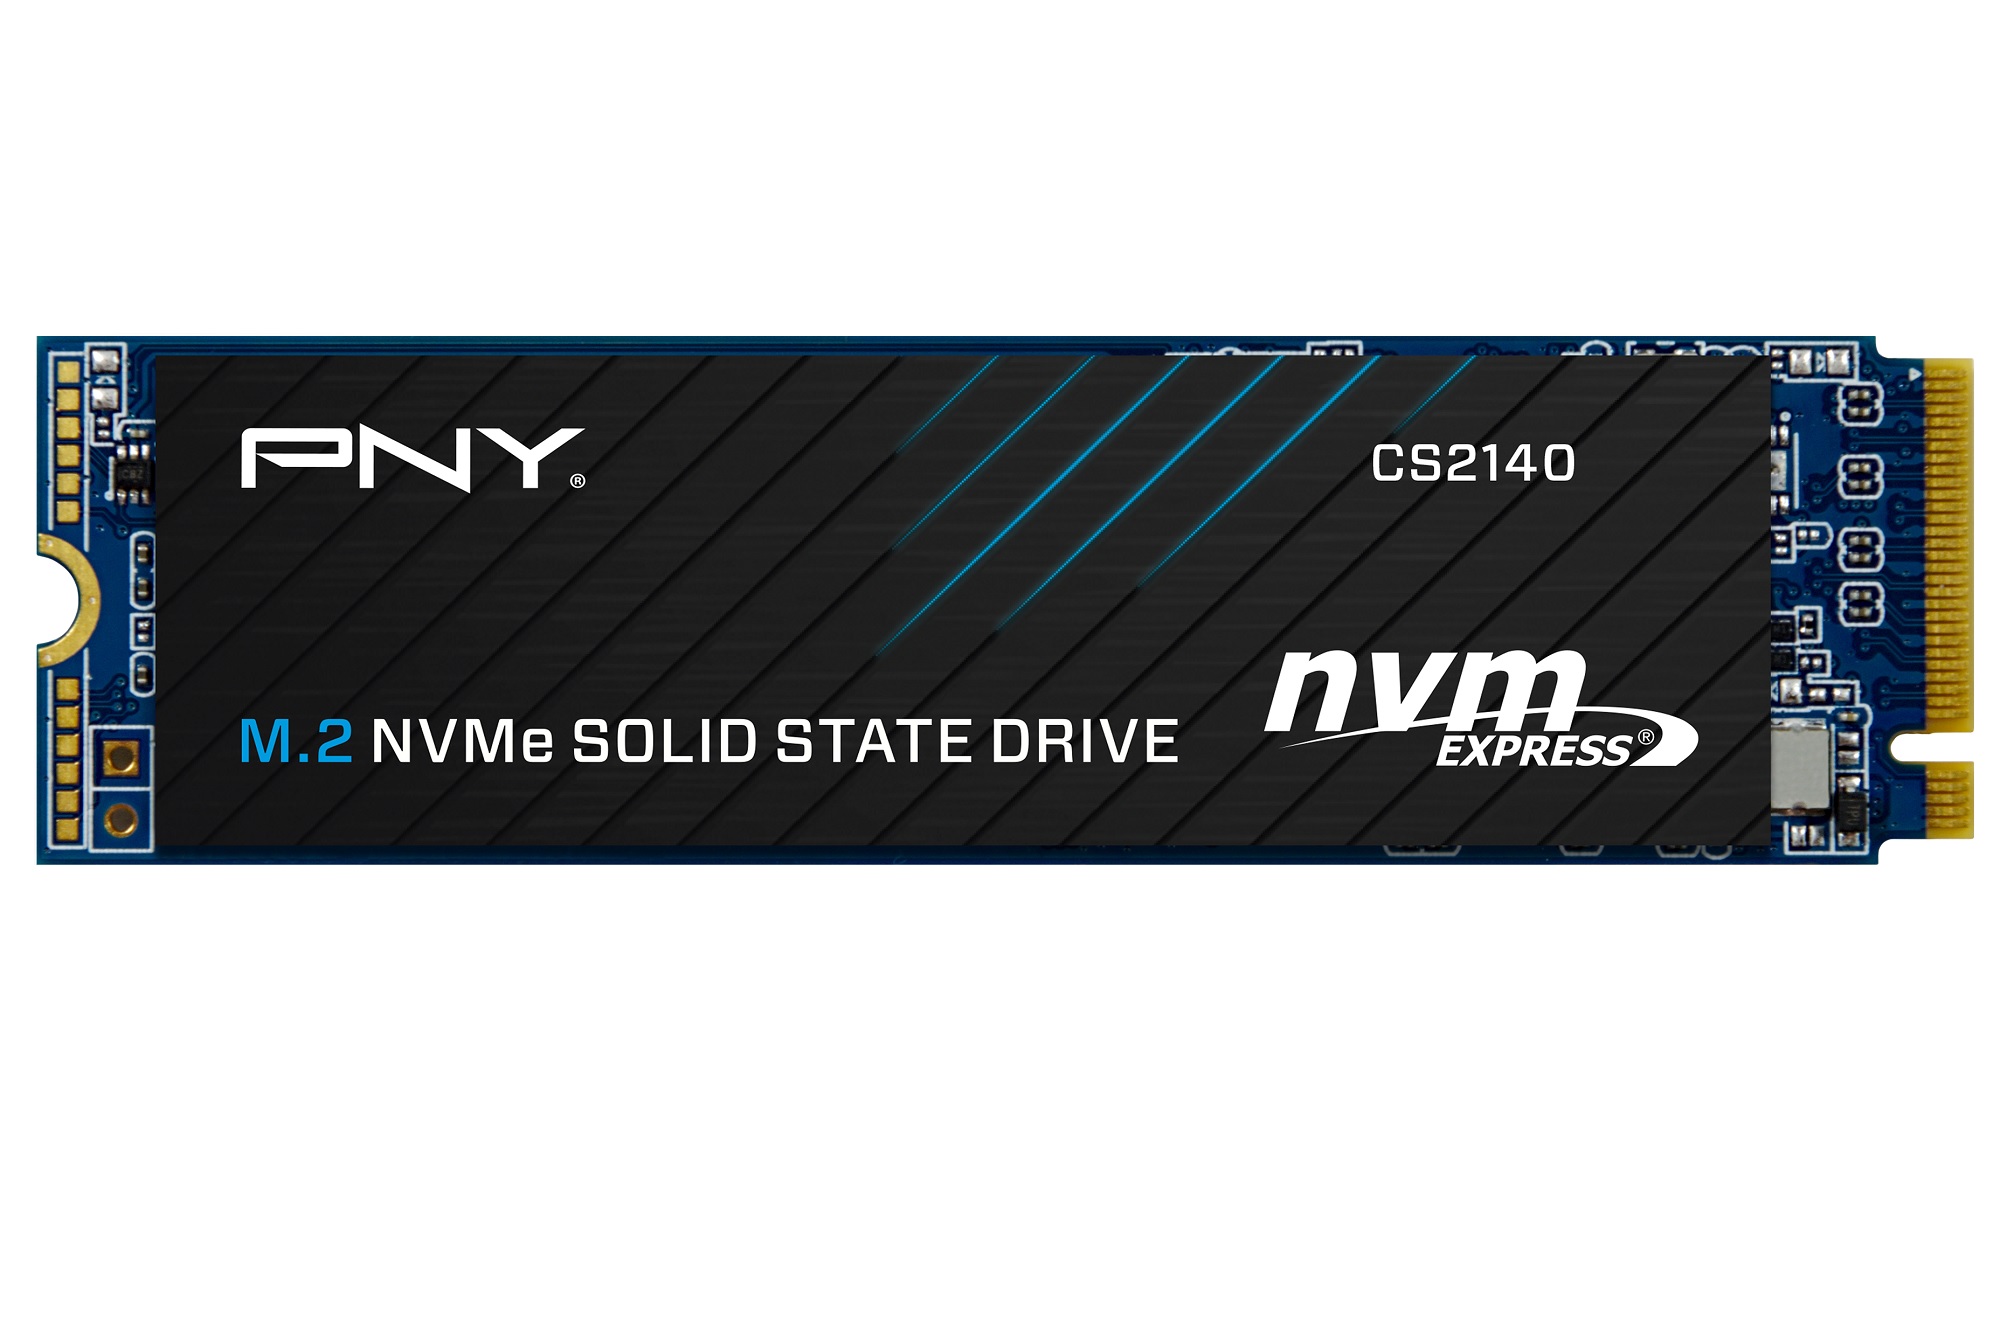 PNY CS2140 1 Tt NVMe SSD